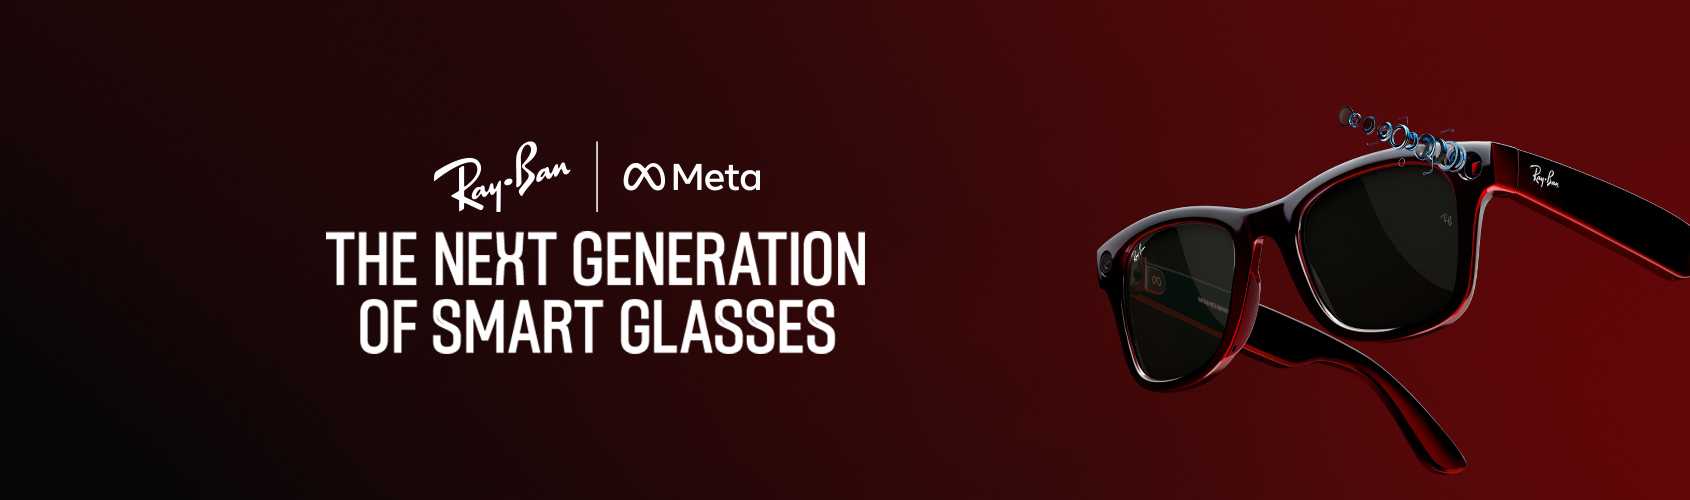 Ray-ban Meta Smart Glasses.